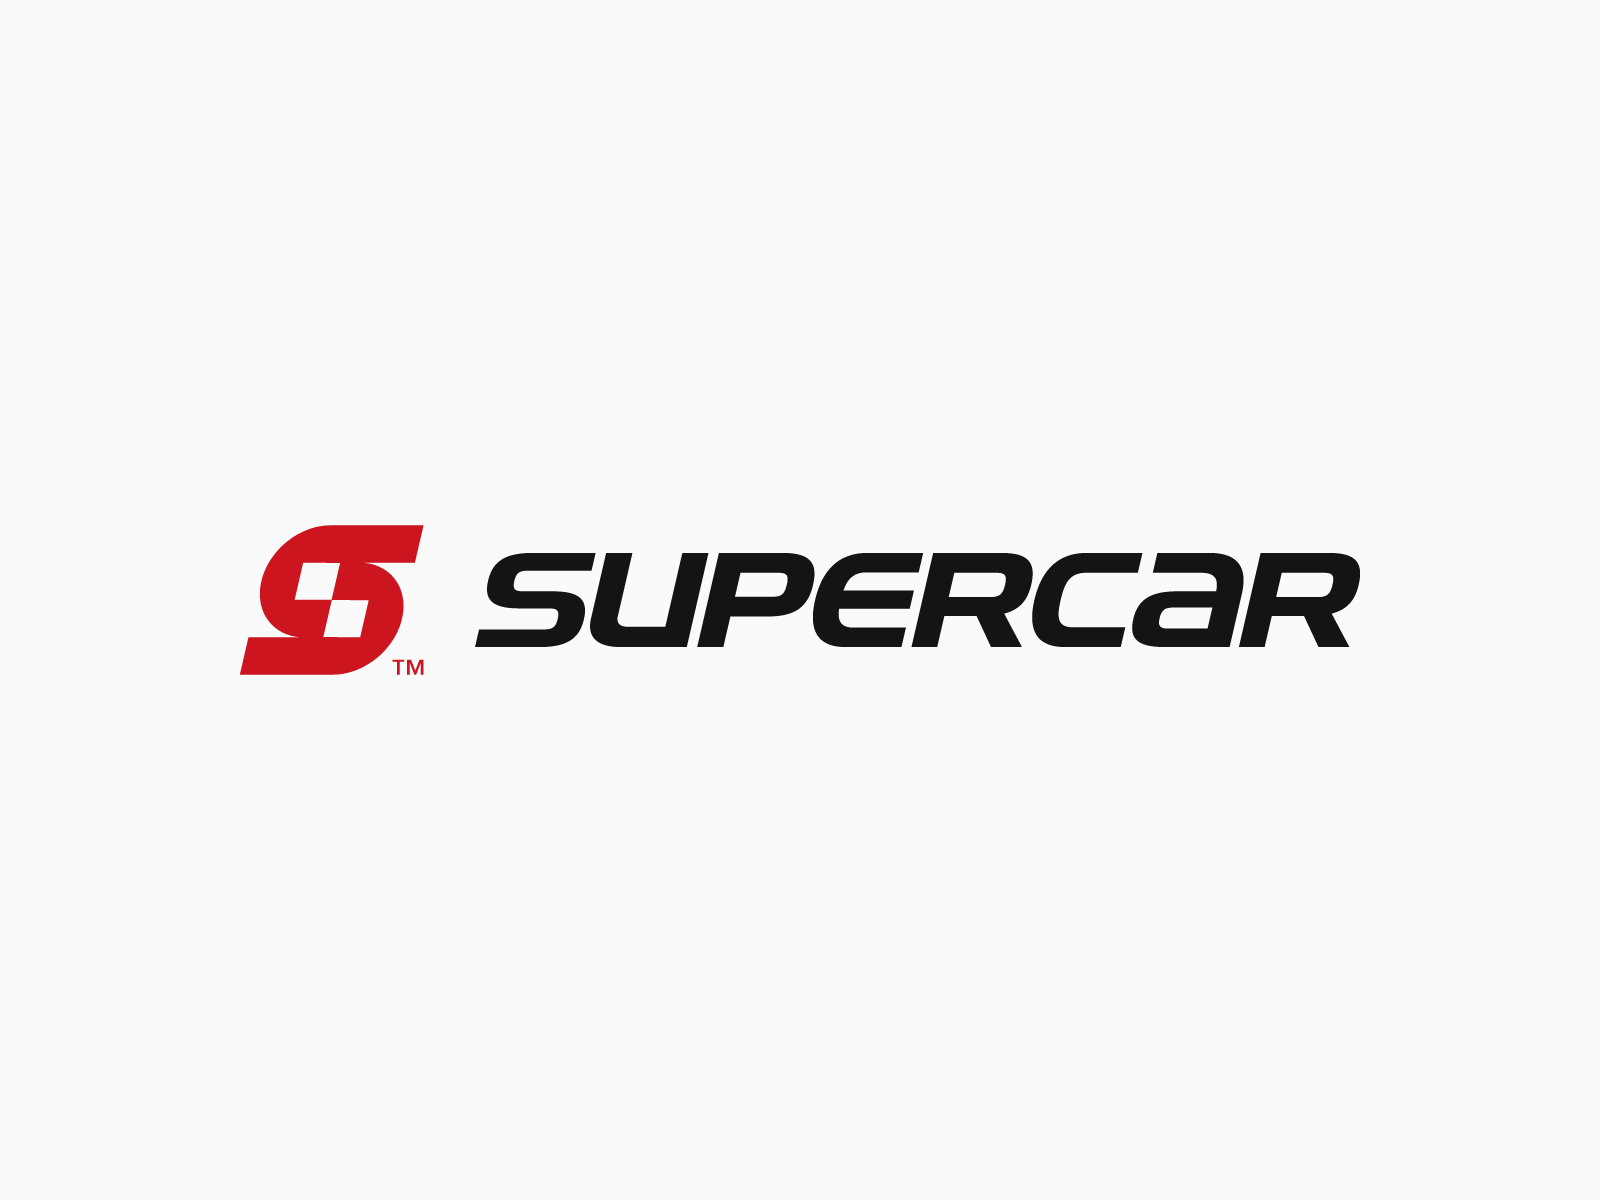 Super Car logo, Vector Logo of Super Car brand free download (eps, ai, png,  cdr) formats